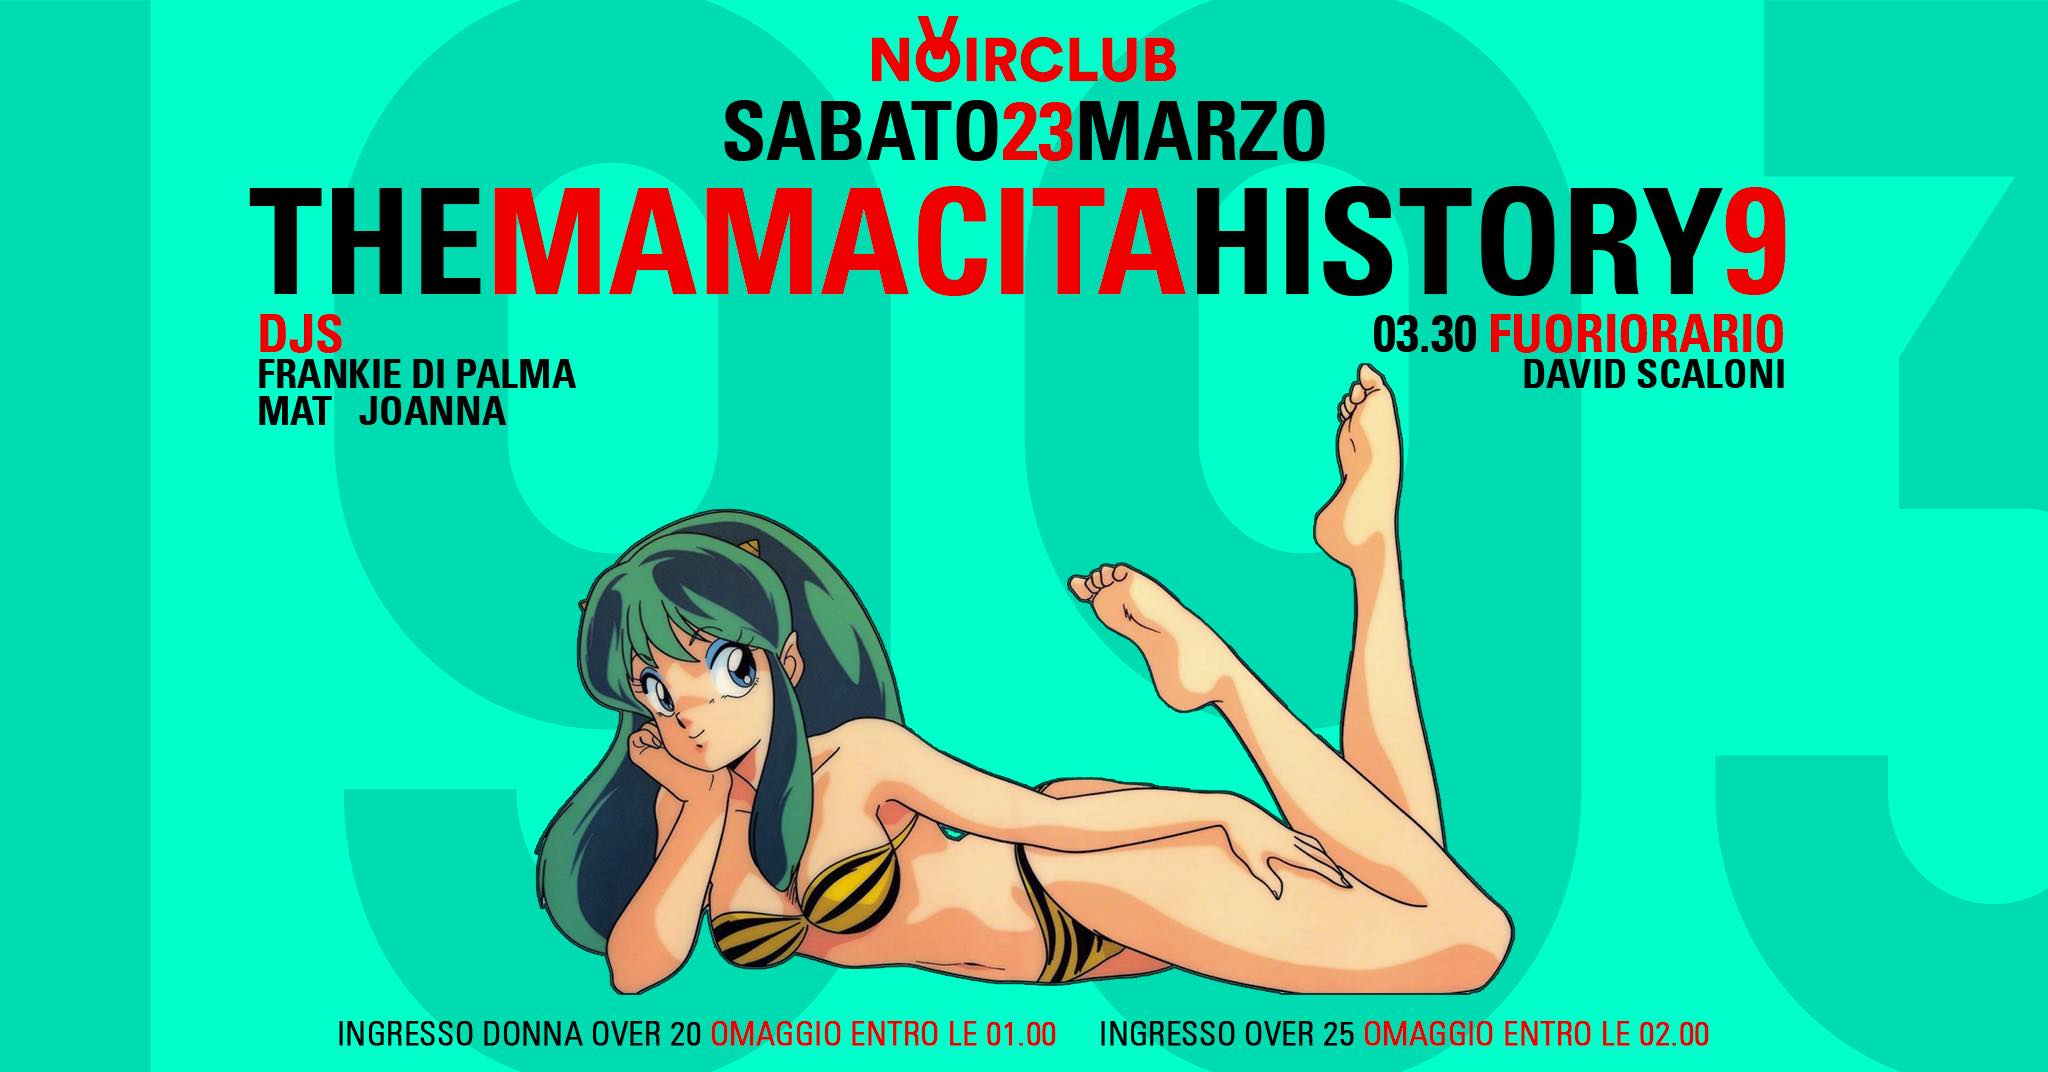 Noir Club Jesi The Mamacita History 9